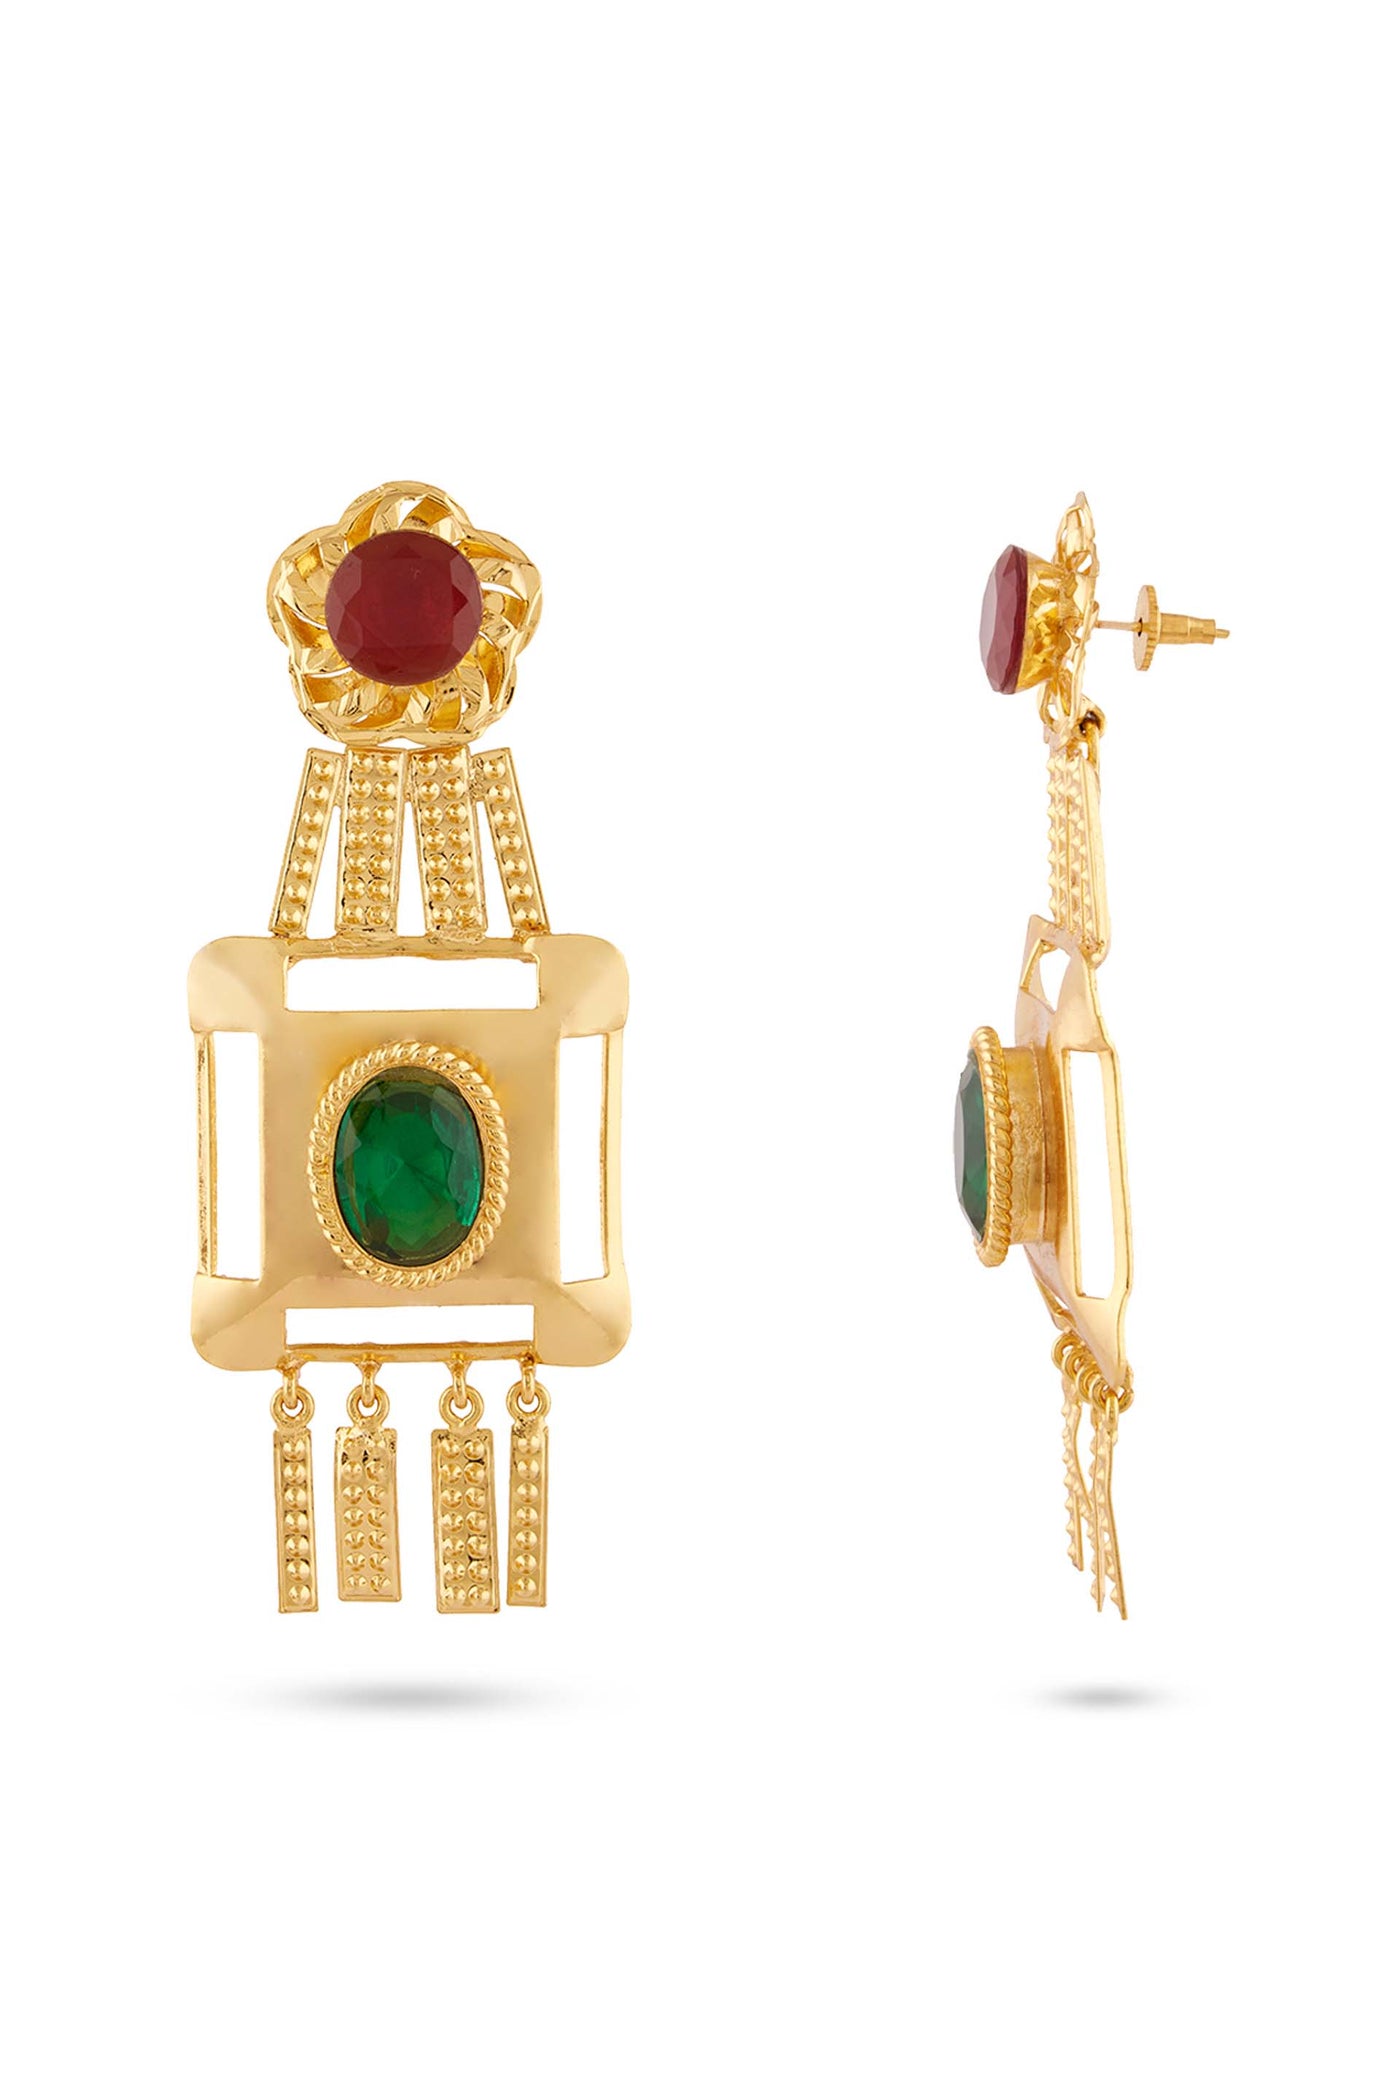 Valliyan vintage Mr India earrings fashion jewellery online shopping melange singapore indian designer wear